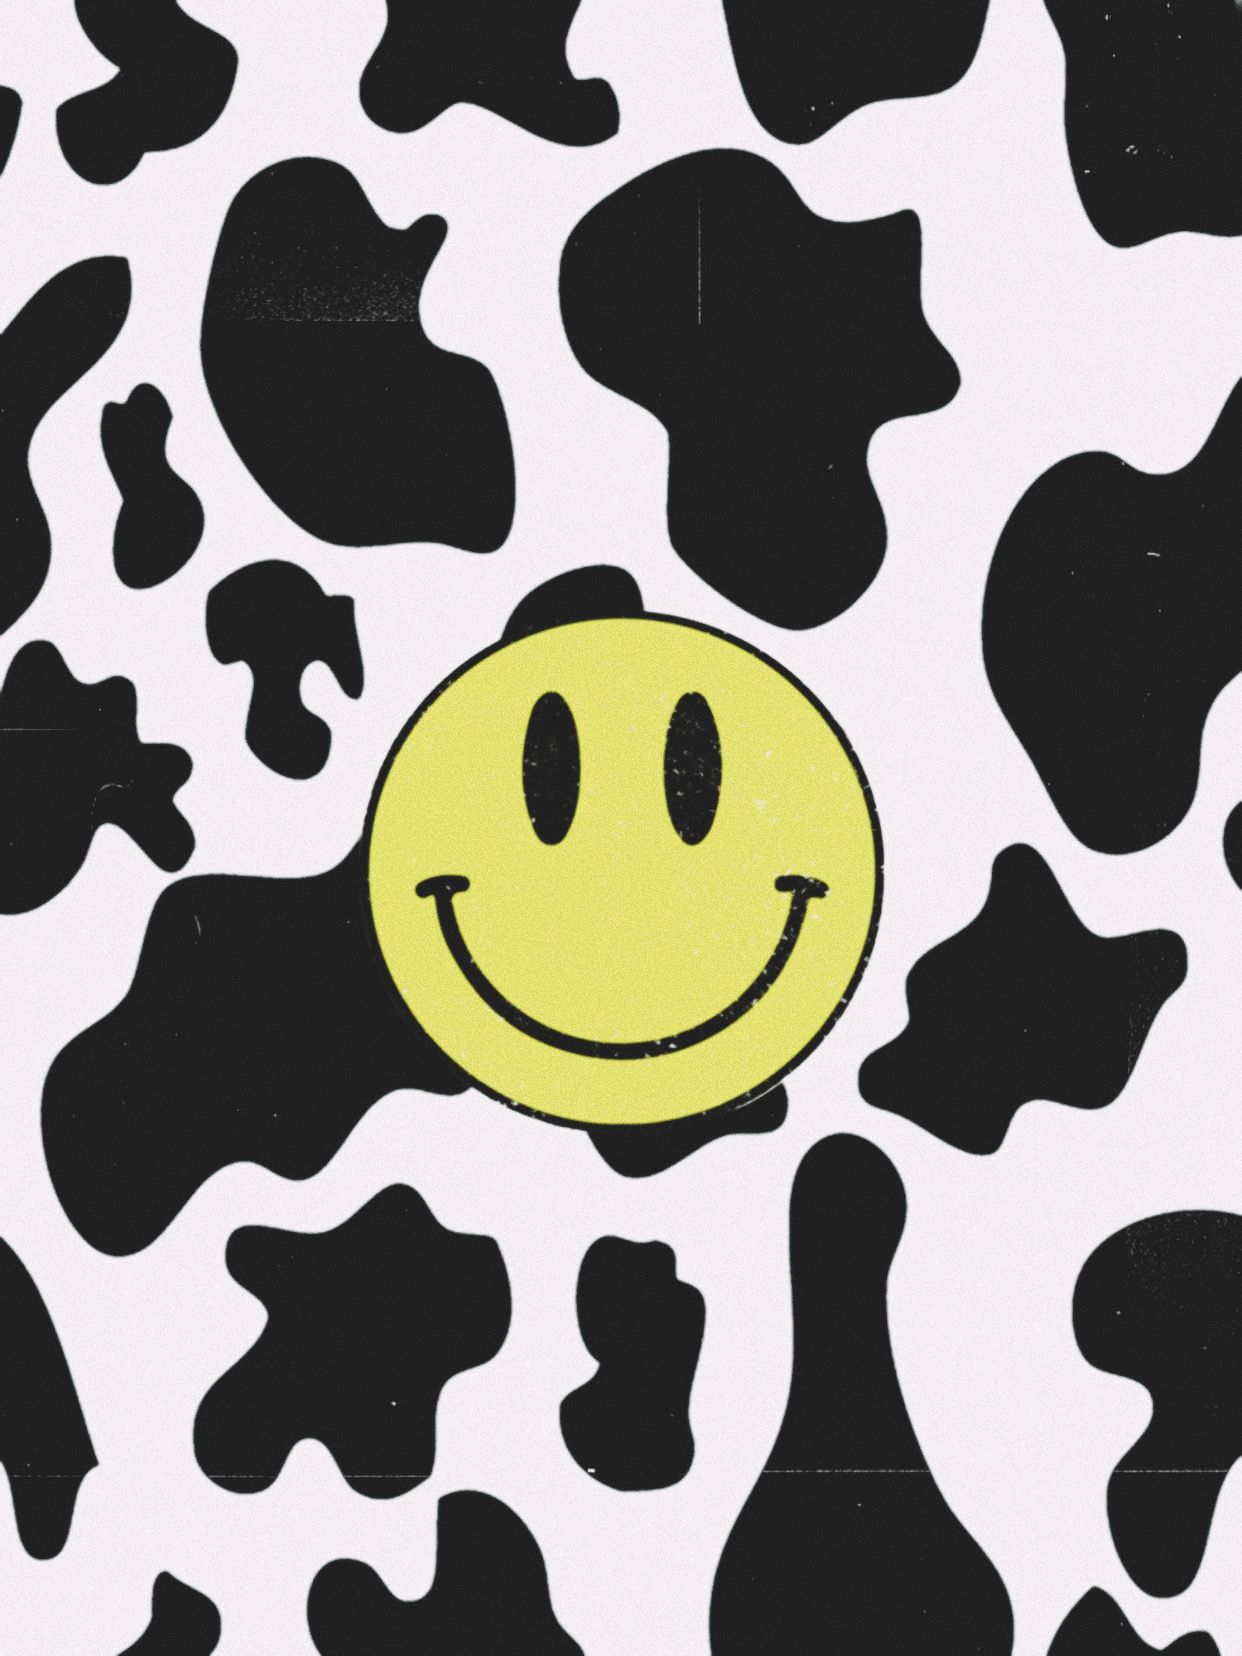 Smiley face wallpaper cow wallpaper cow print wallpaper cute patterns wallpaper